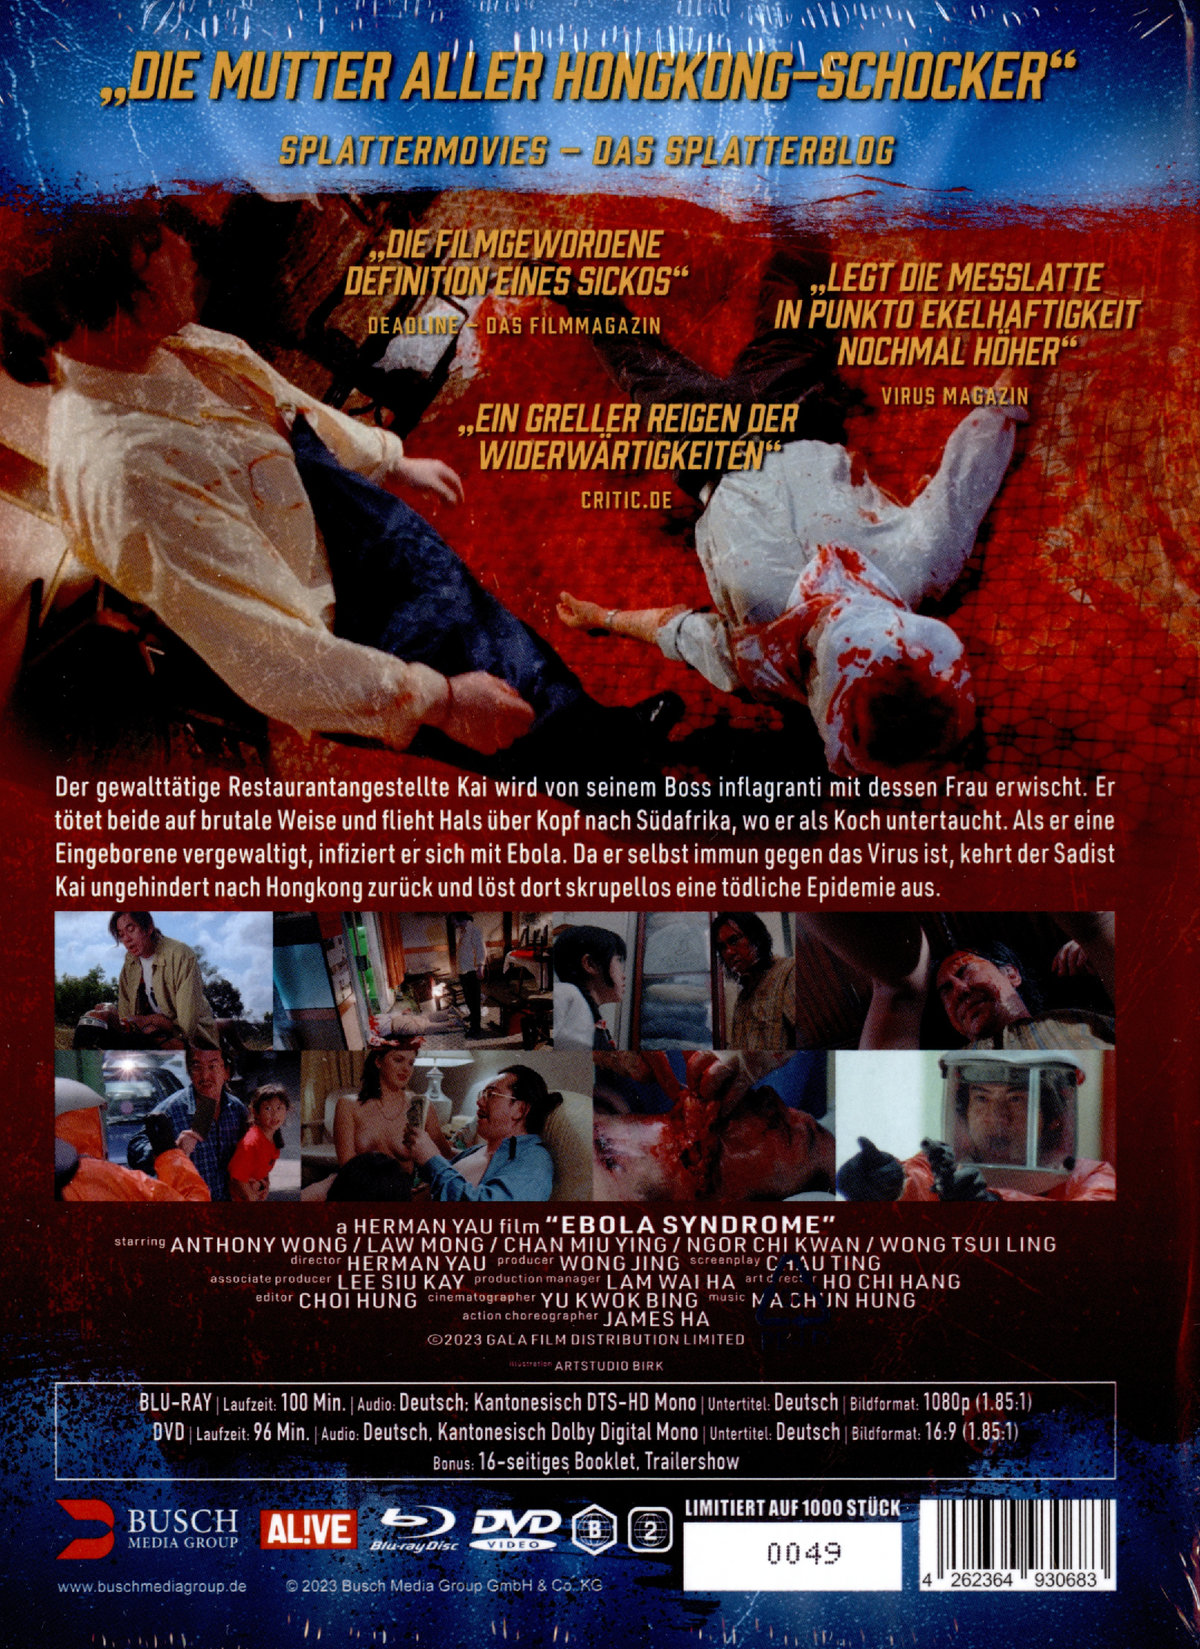 Ebola Syndrome - Uncut Mediabook Edition (DVD+blu-ray) (D)